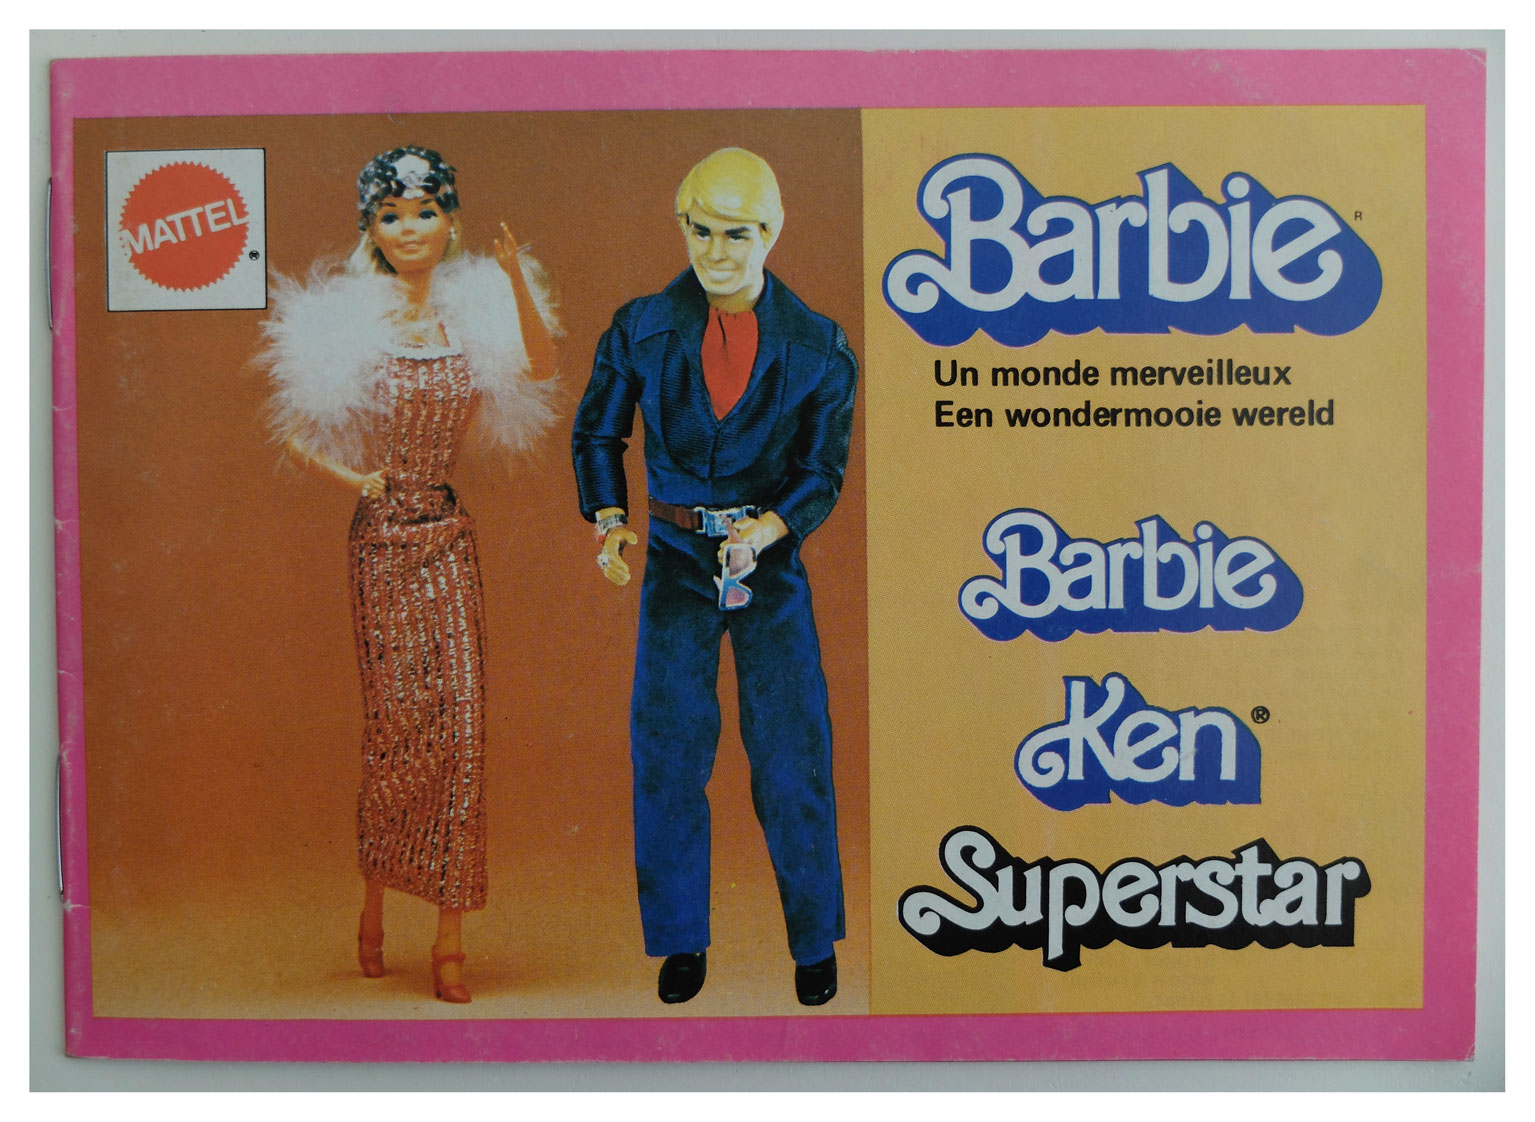 From 1978 Belgian Barbie booklet